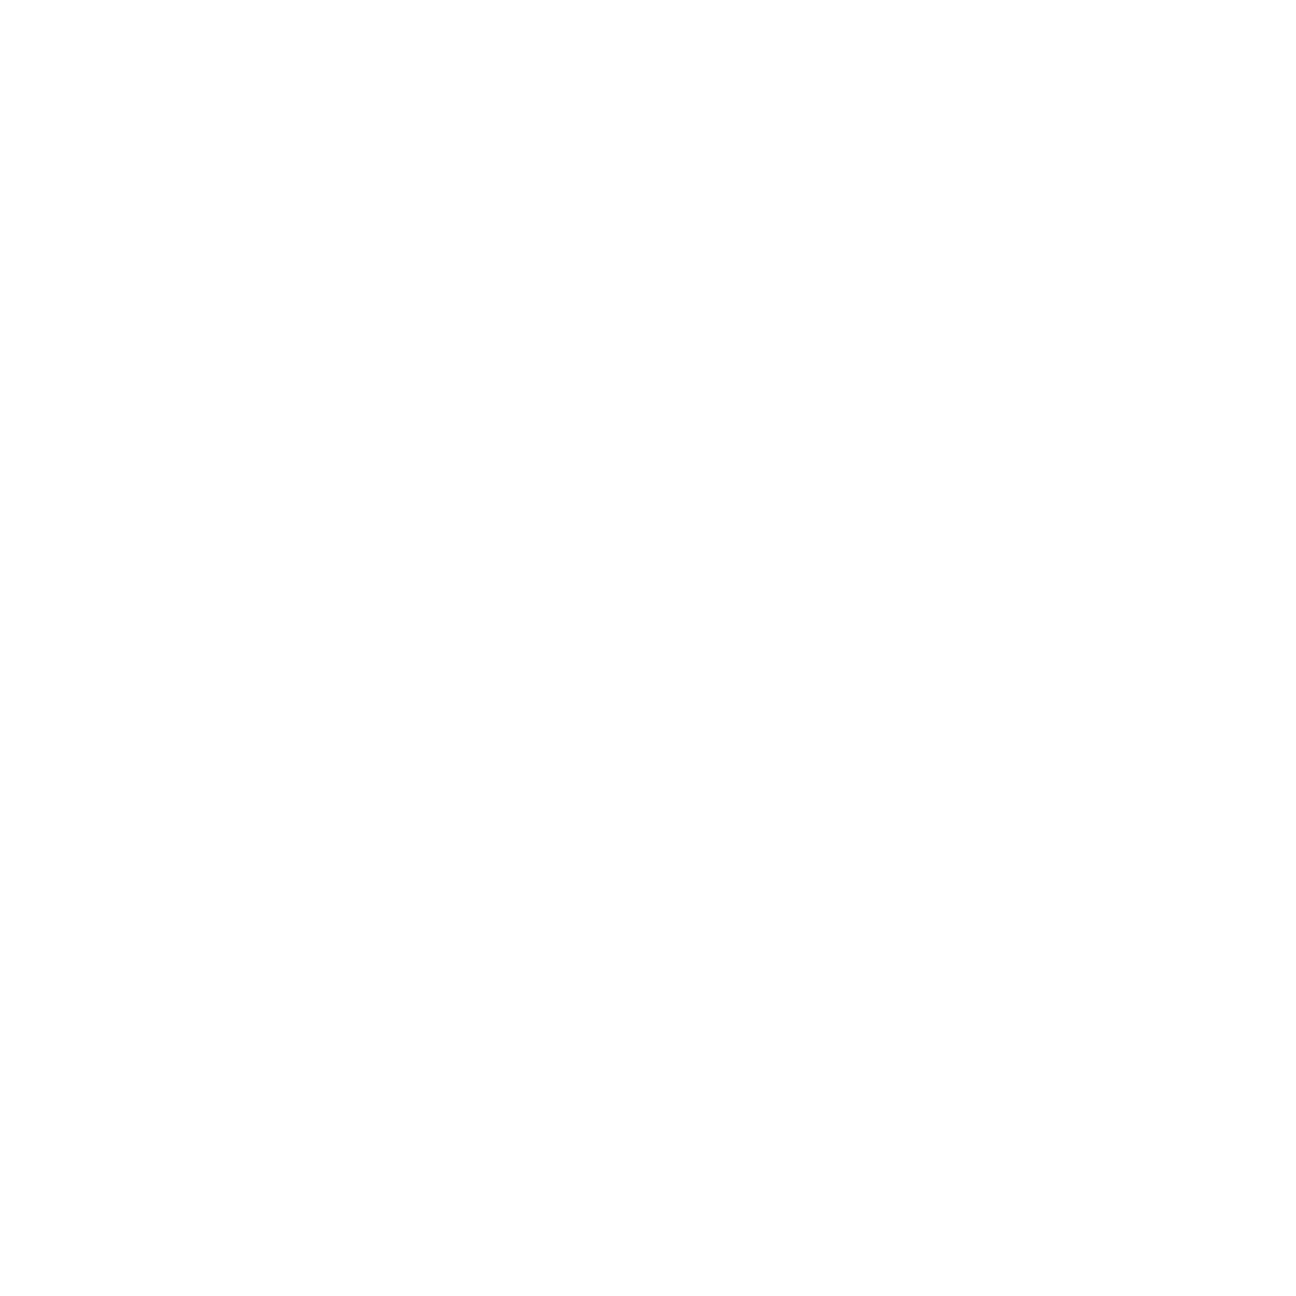 https://datascience.averconferences.com/